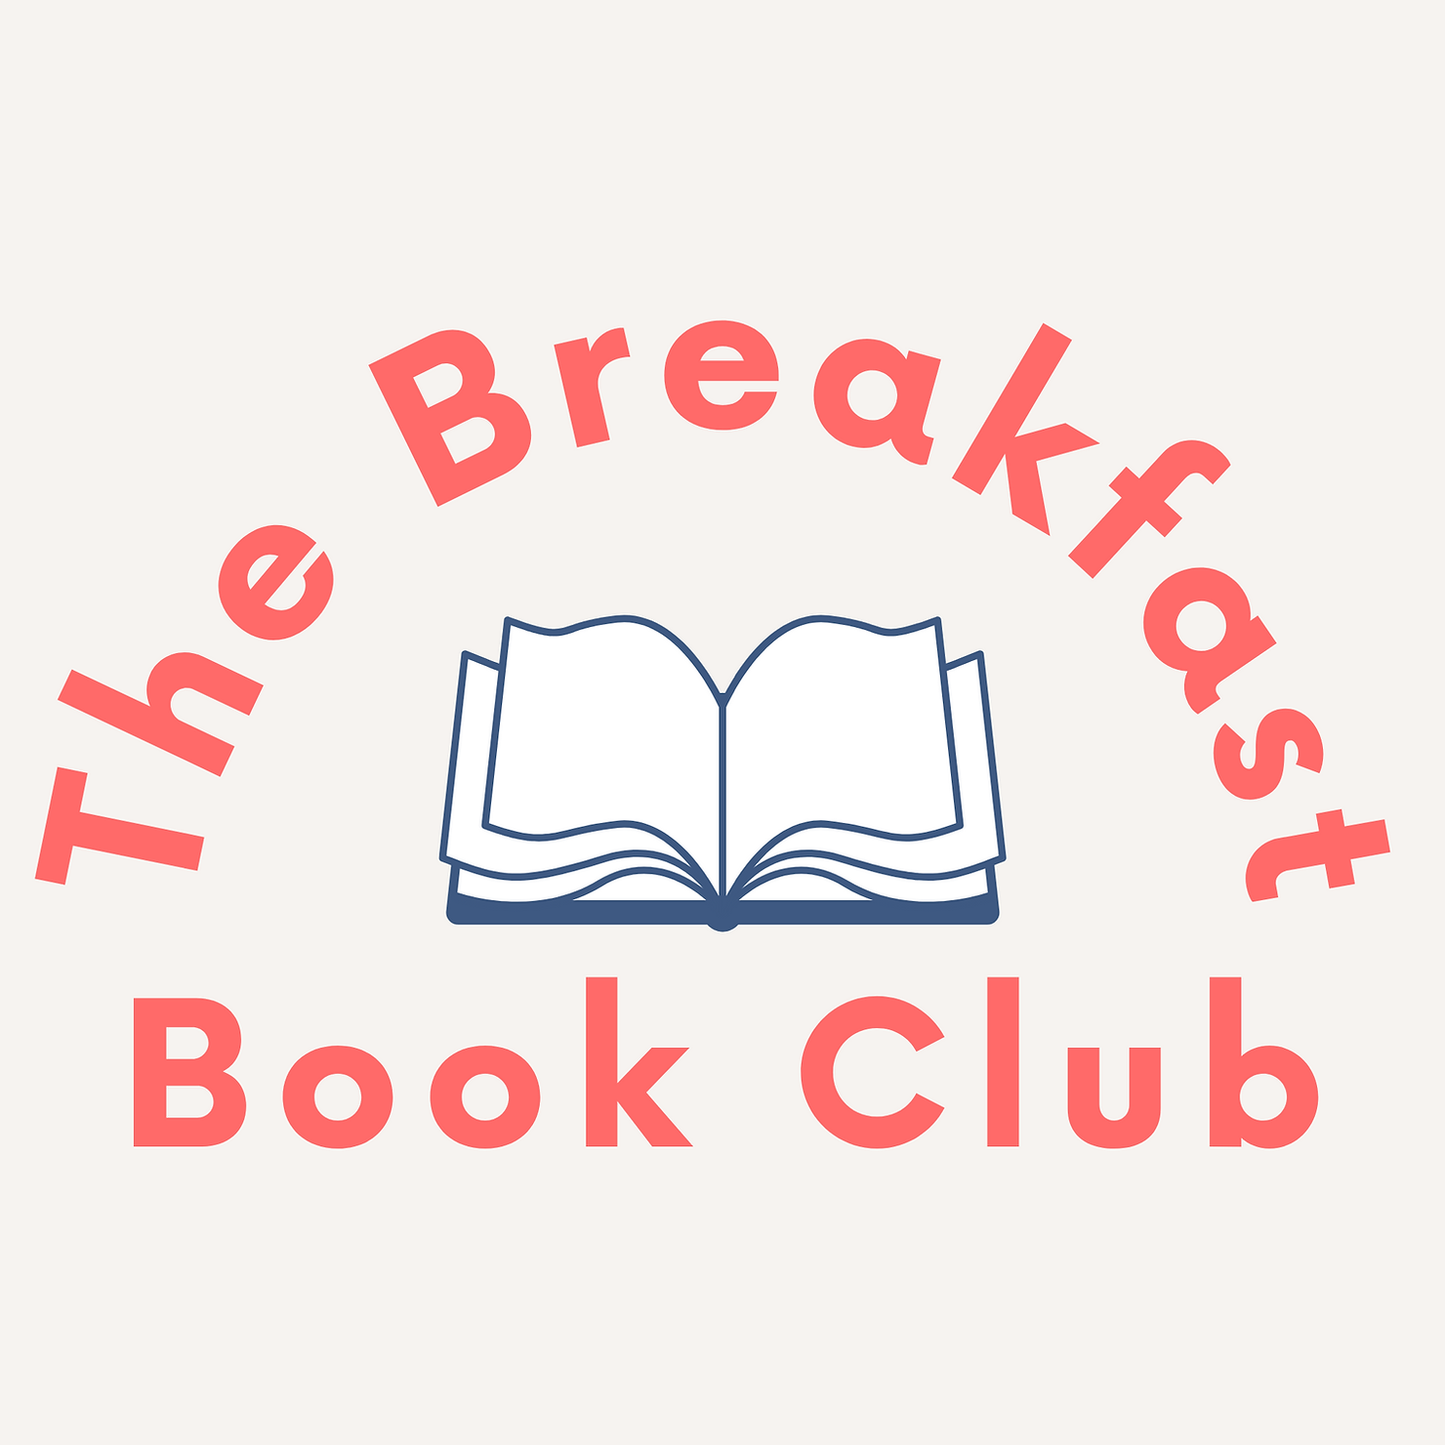 Annual Book Club Membership